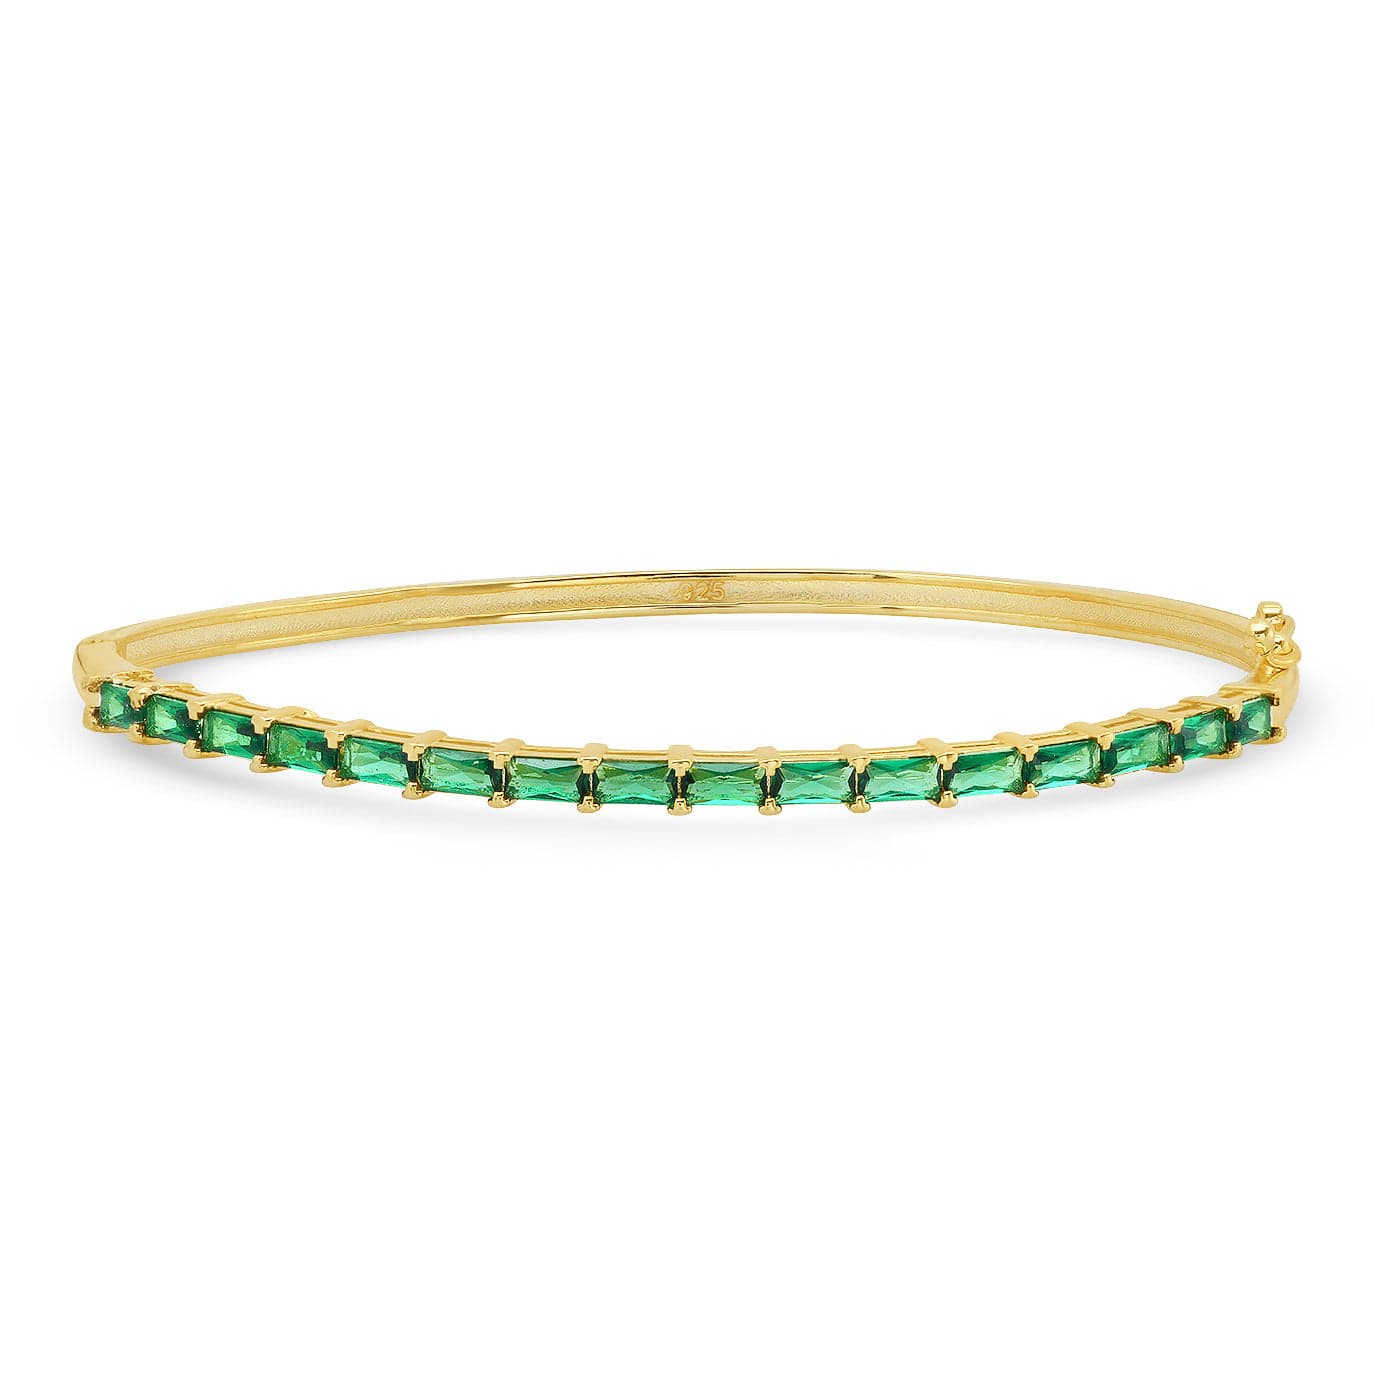 TAI JEWELRY Bracelet Emerald Bangle Bracelet